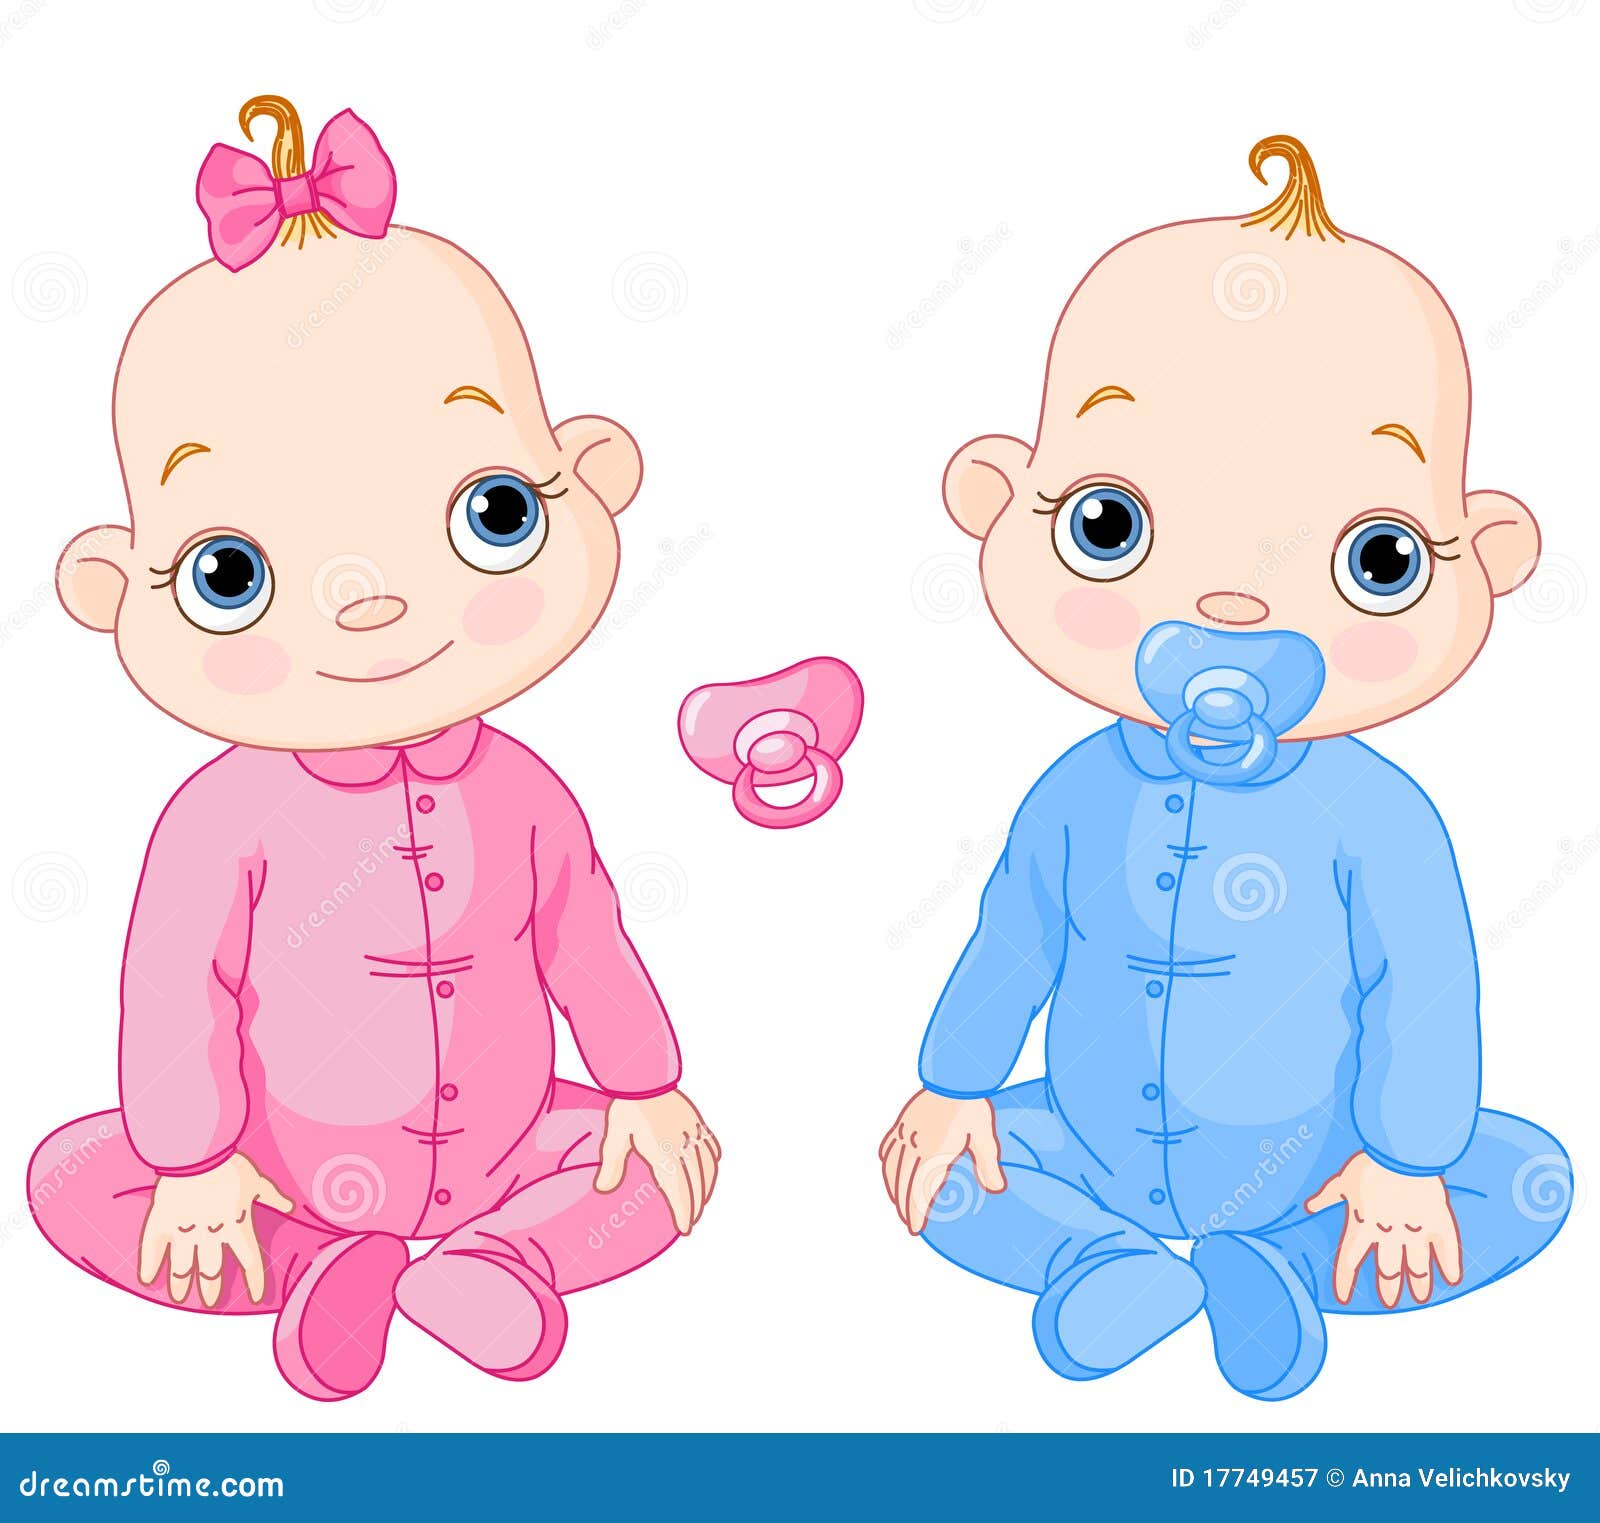 clipart baby zwillinge - photo #13